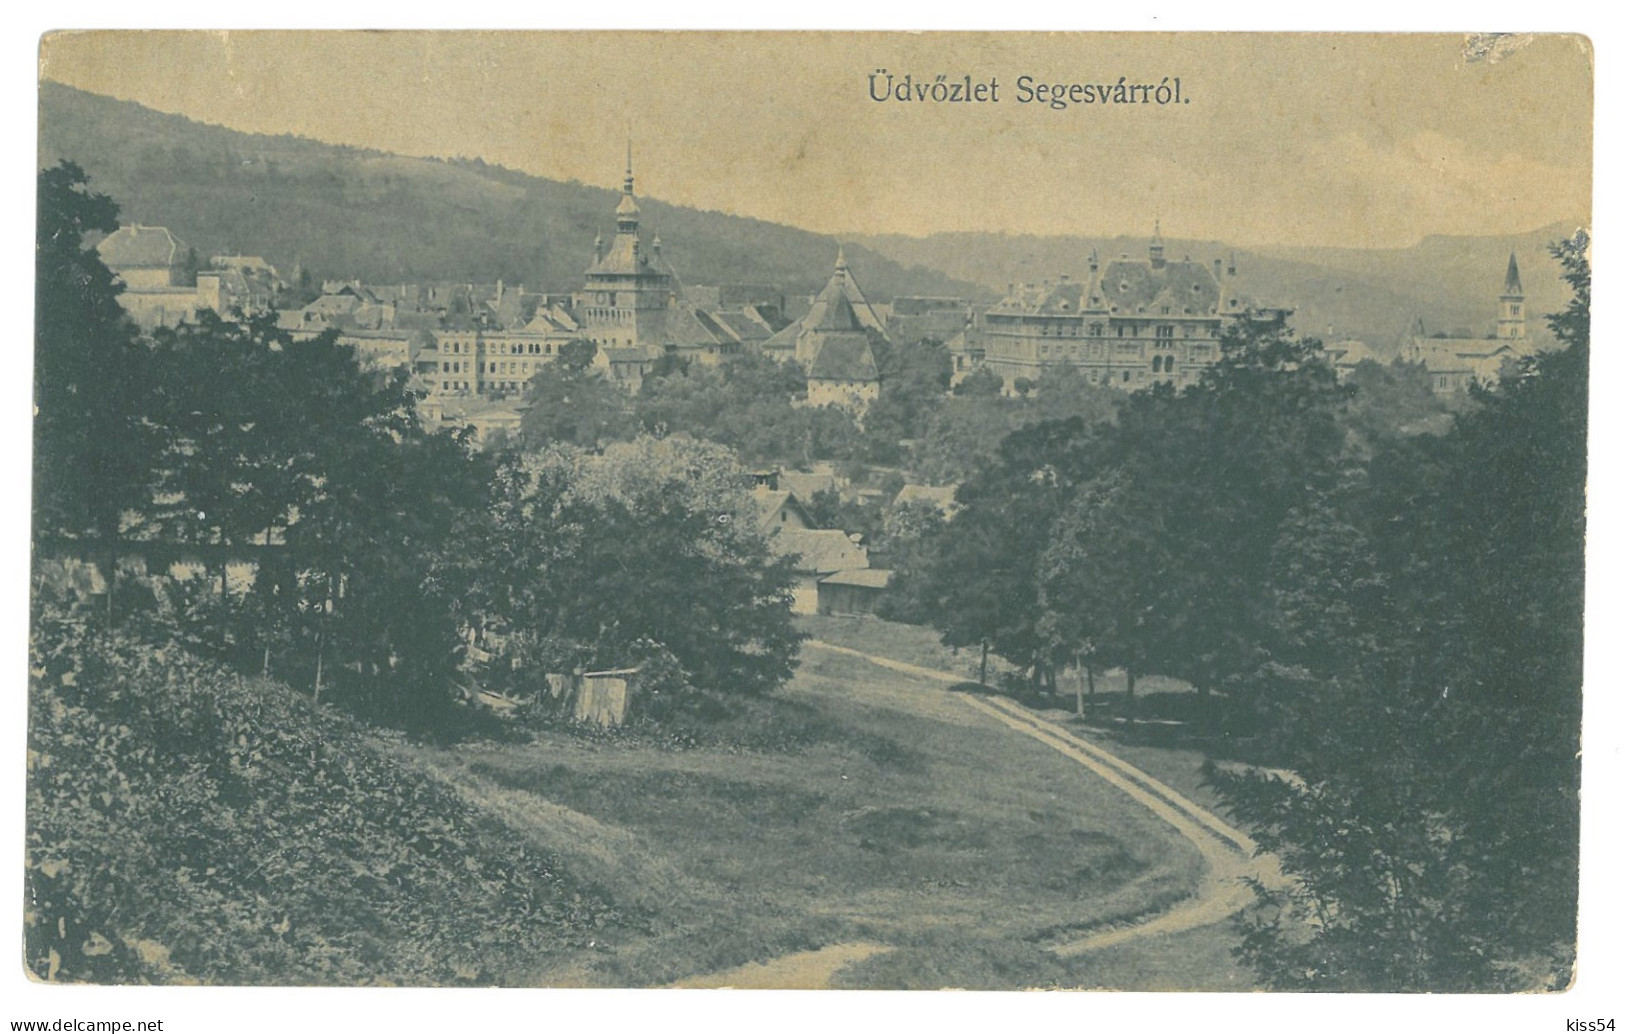 RO 77 - 17524 SIGHISOARA, Mures, Panorama, Romania - Old Postcard, CENSOR - Used - 1916 - Rumania